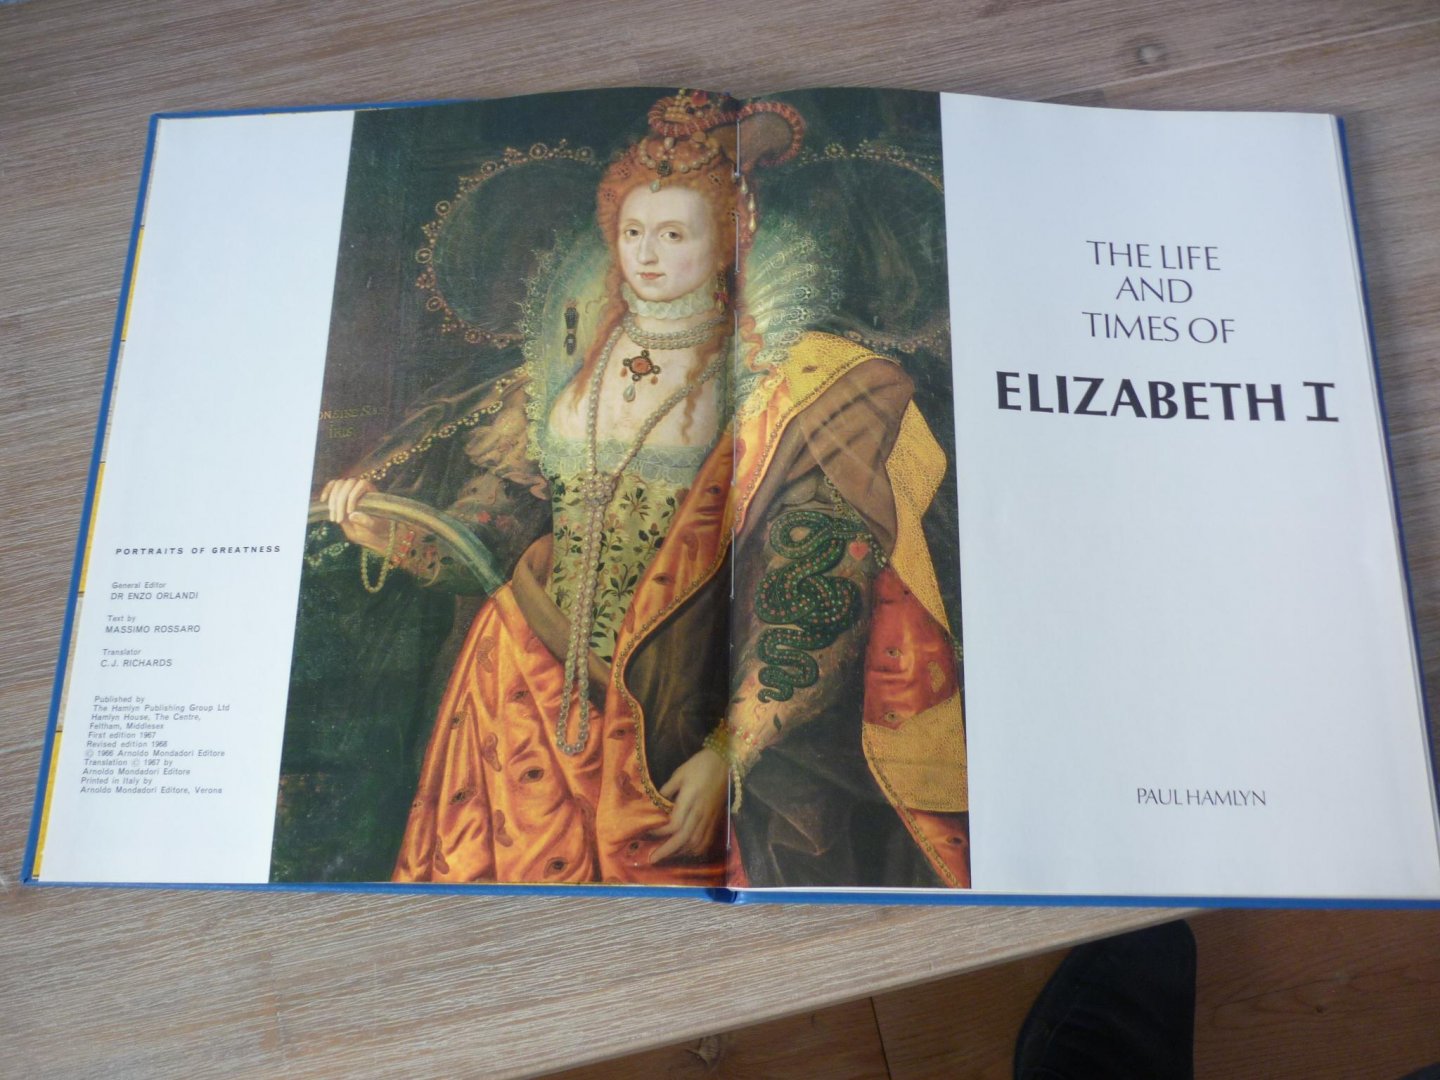 Hamlyn; Paul - The life and times of Elizabeth I